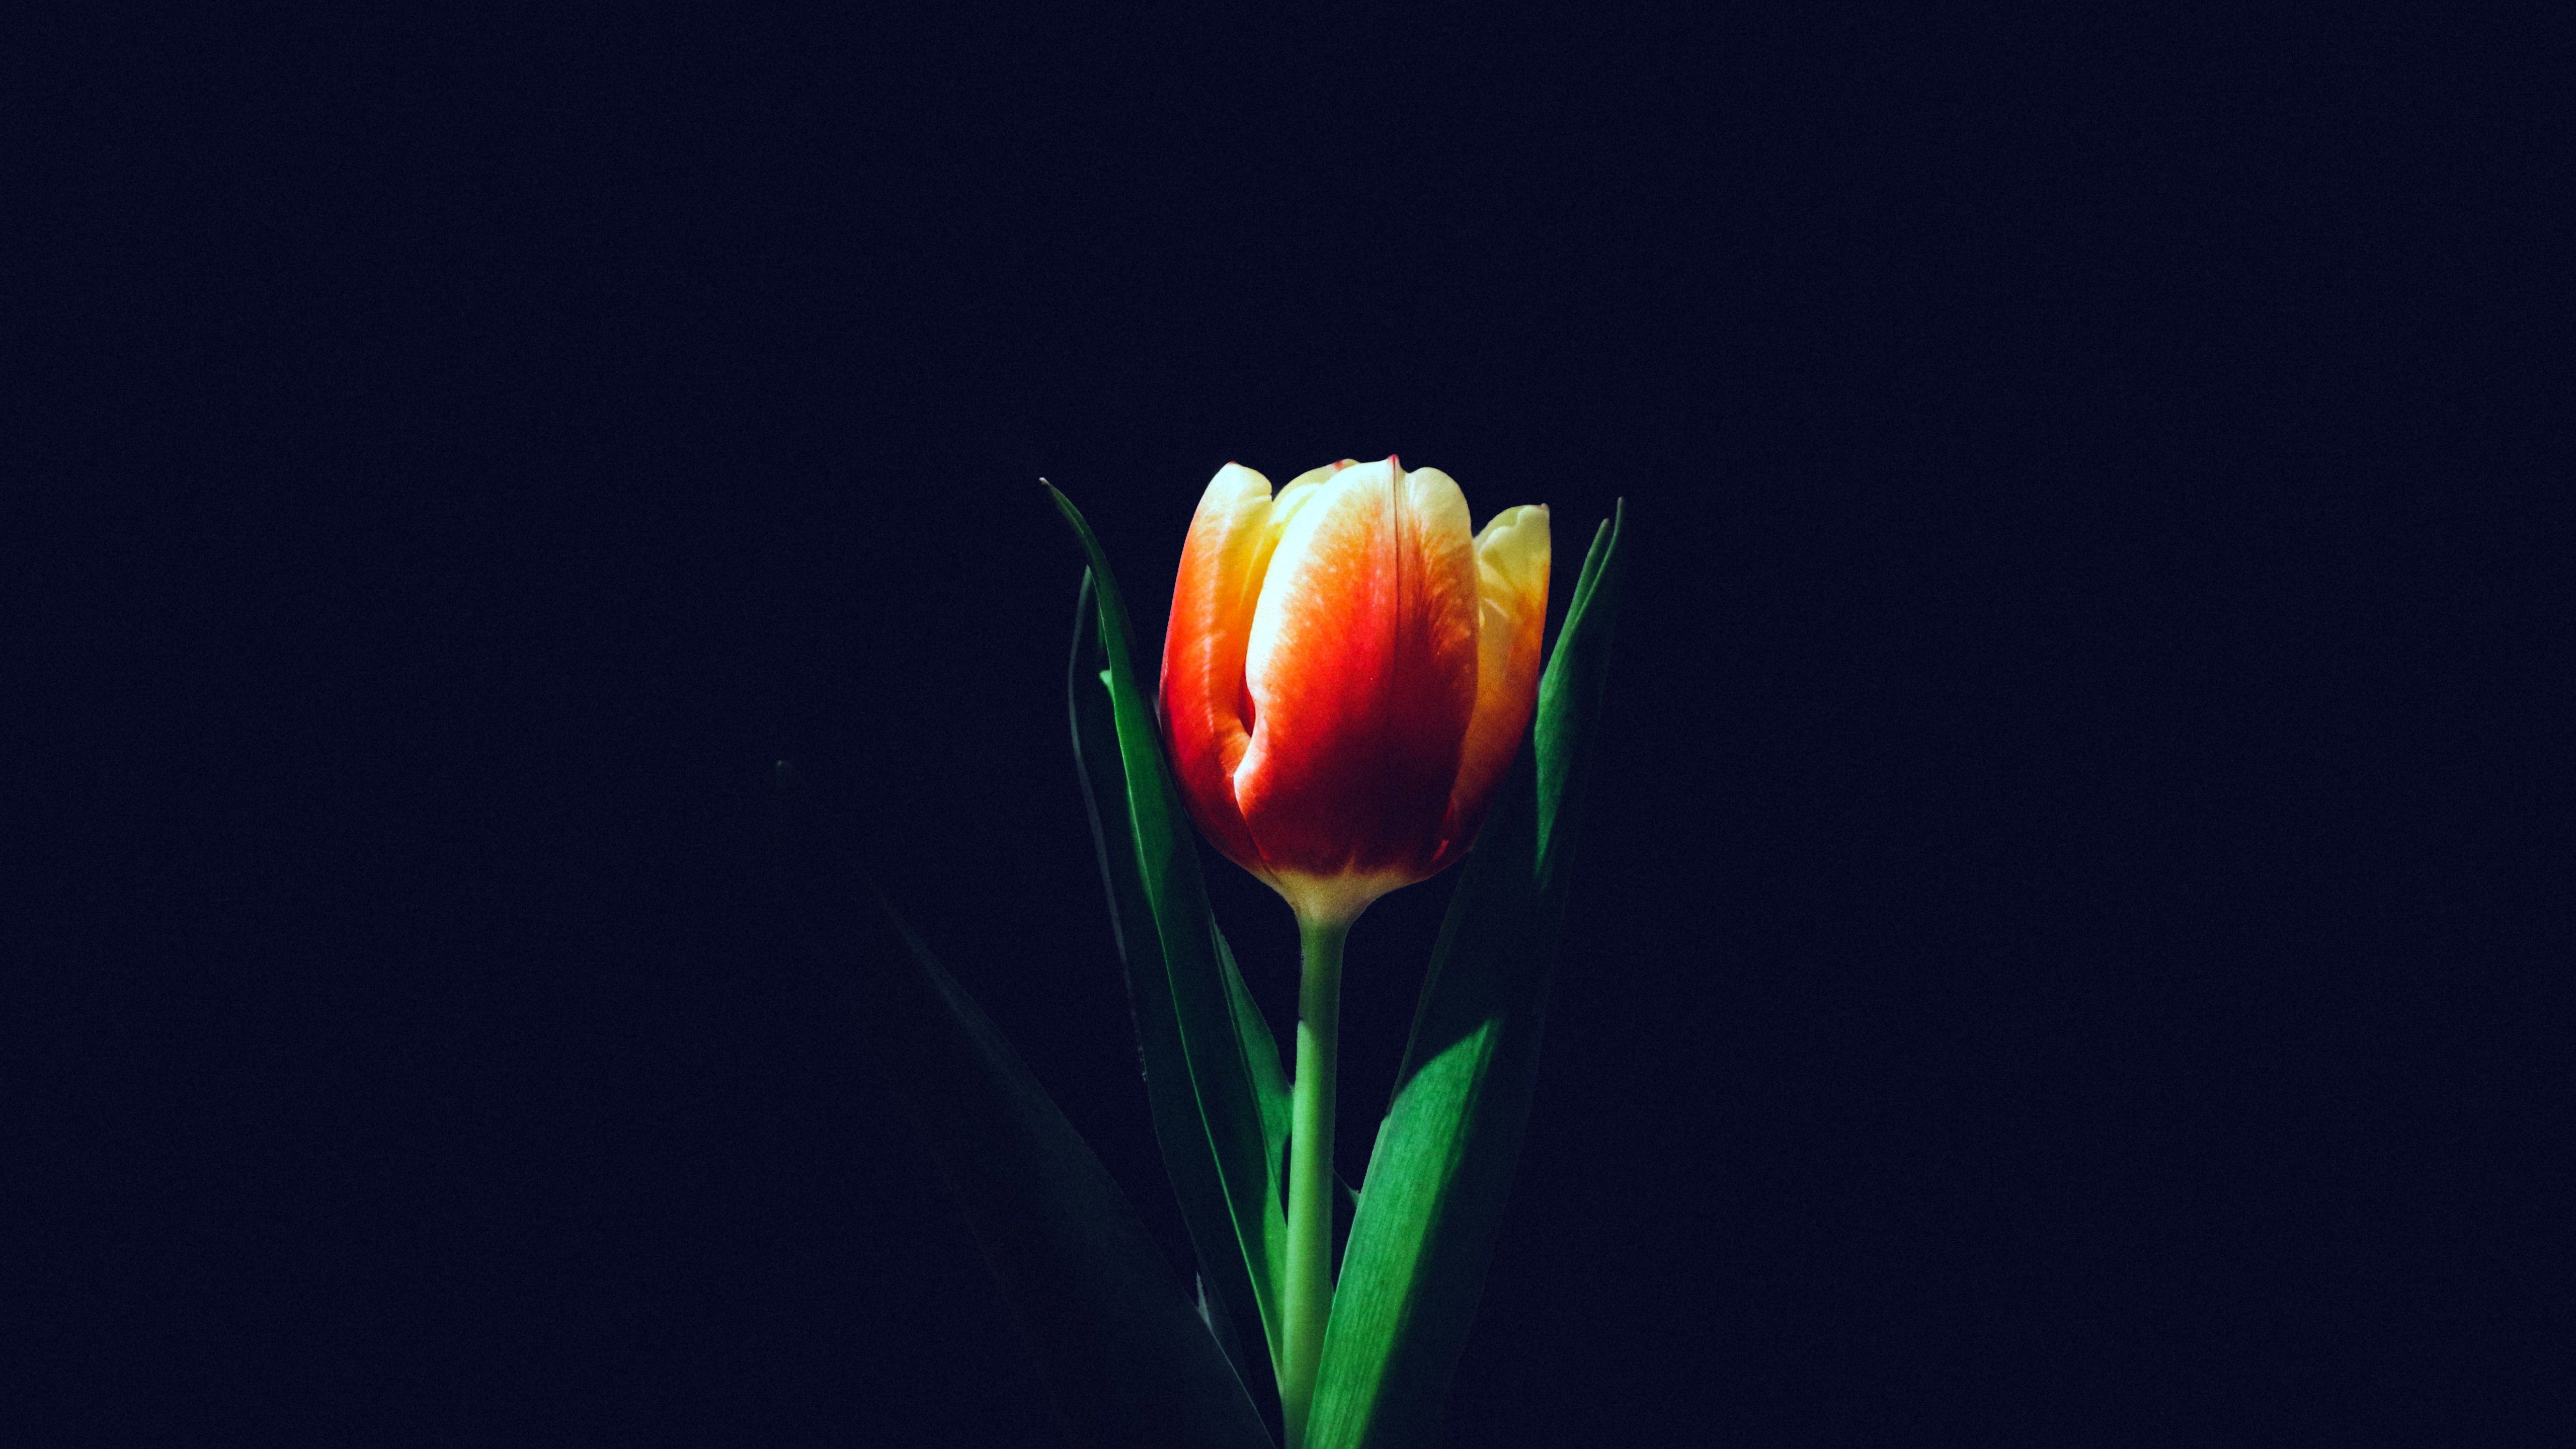 Tulip flower 4K Wallpaper, Orange tulips, Dark background, 5K, Flowers